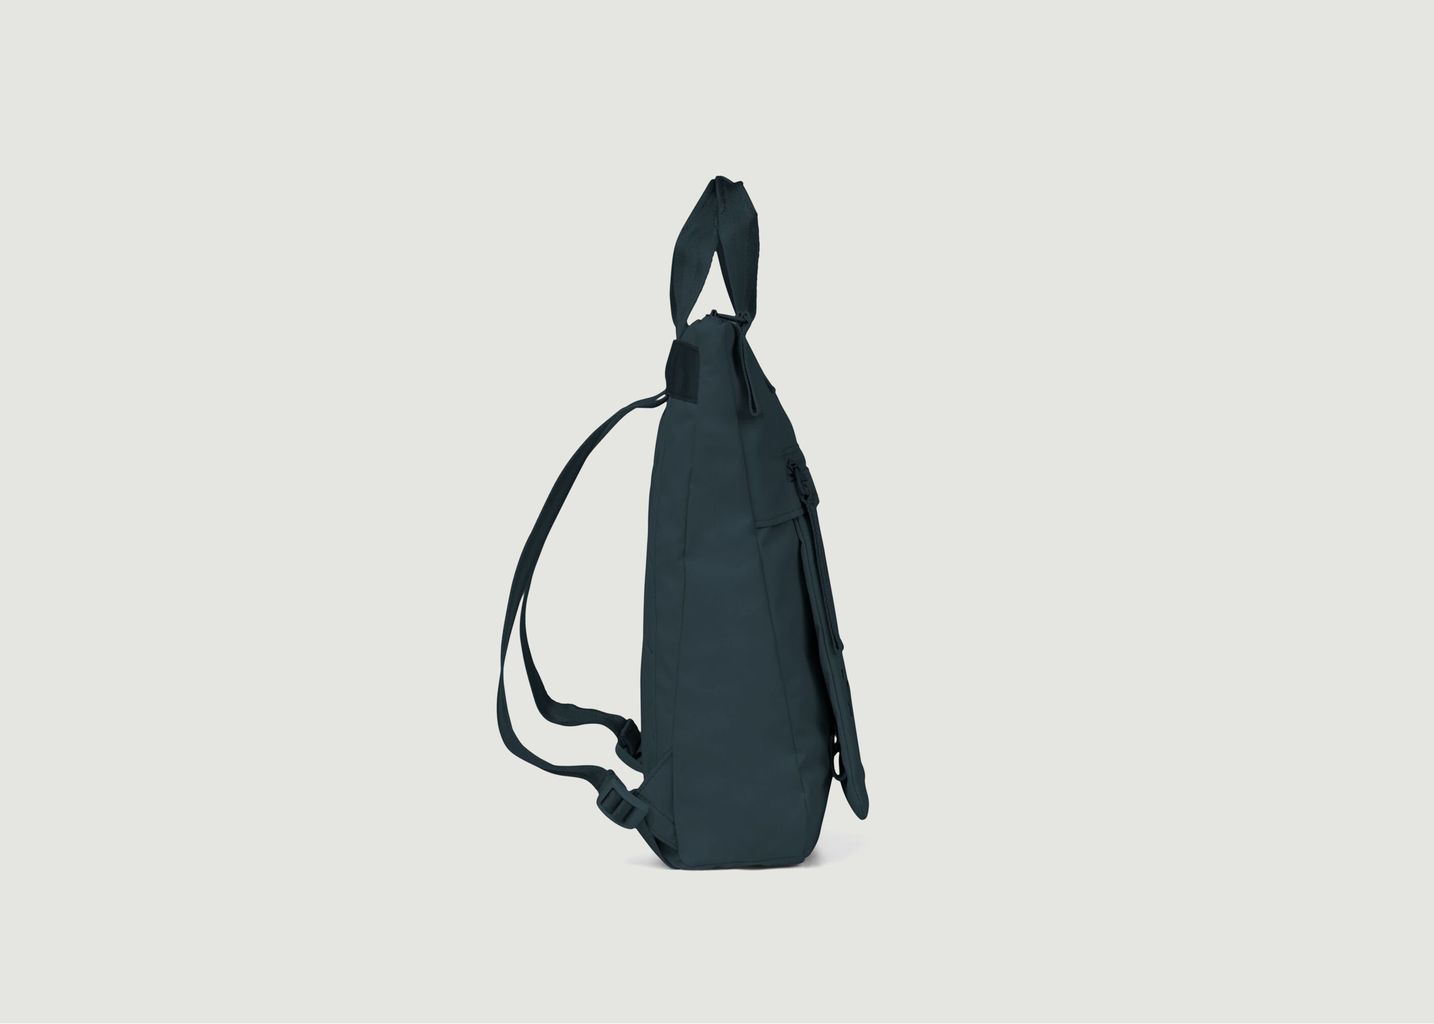 Fleks backpack and tote bag - Pinqponq